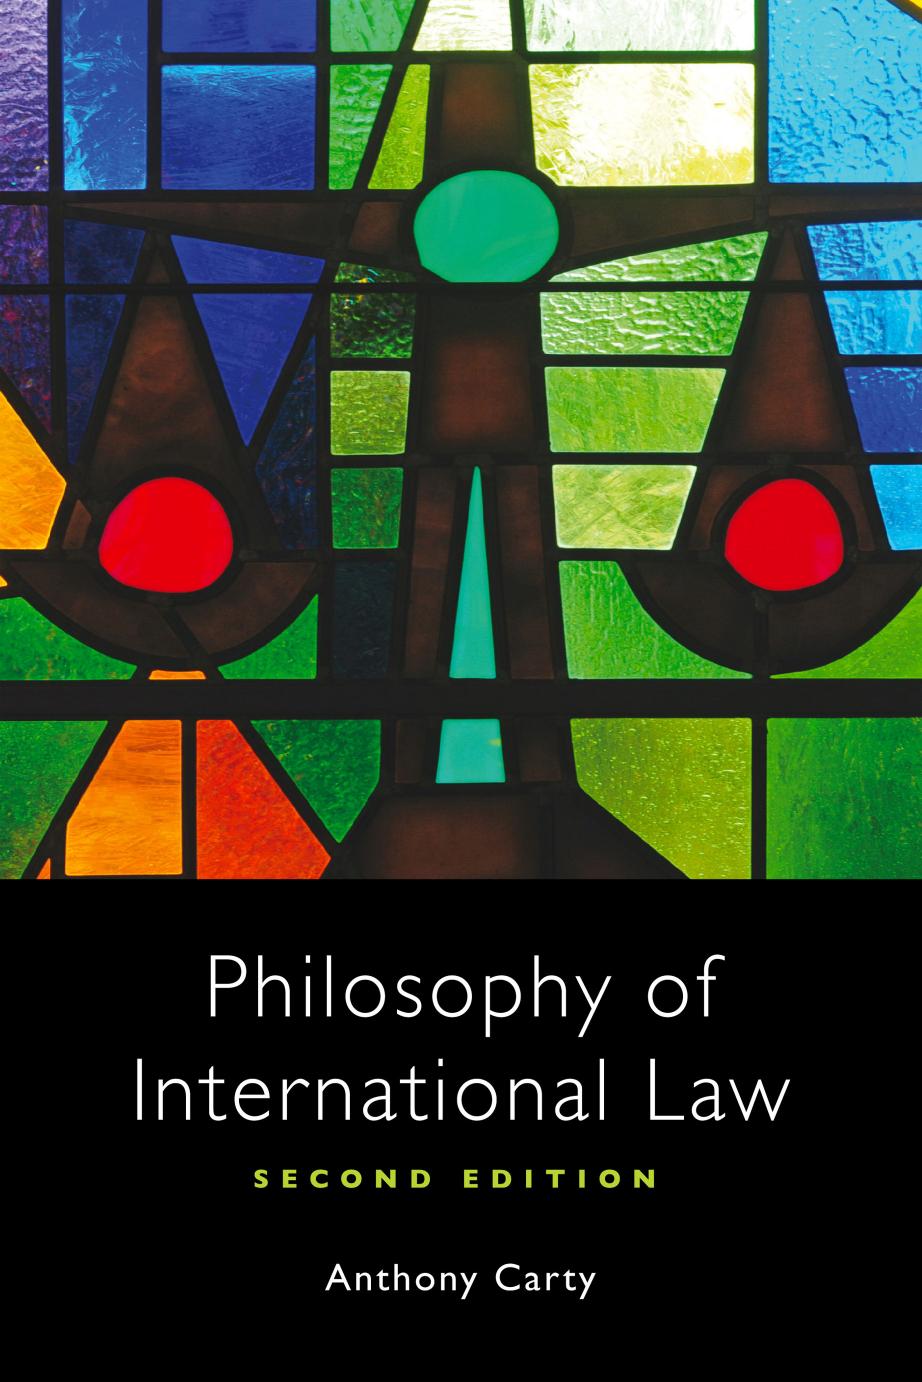 Philosophy of International Law